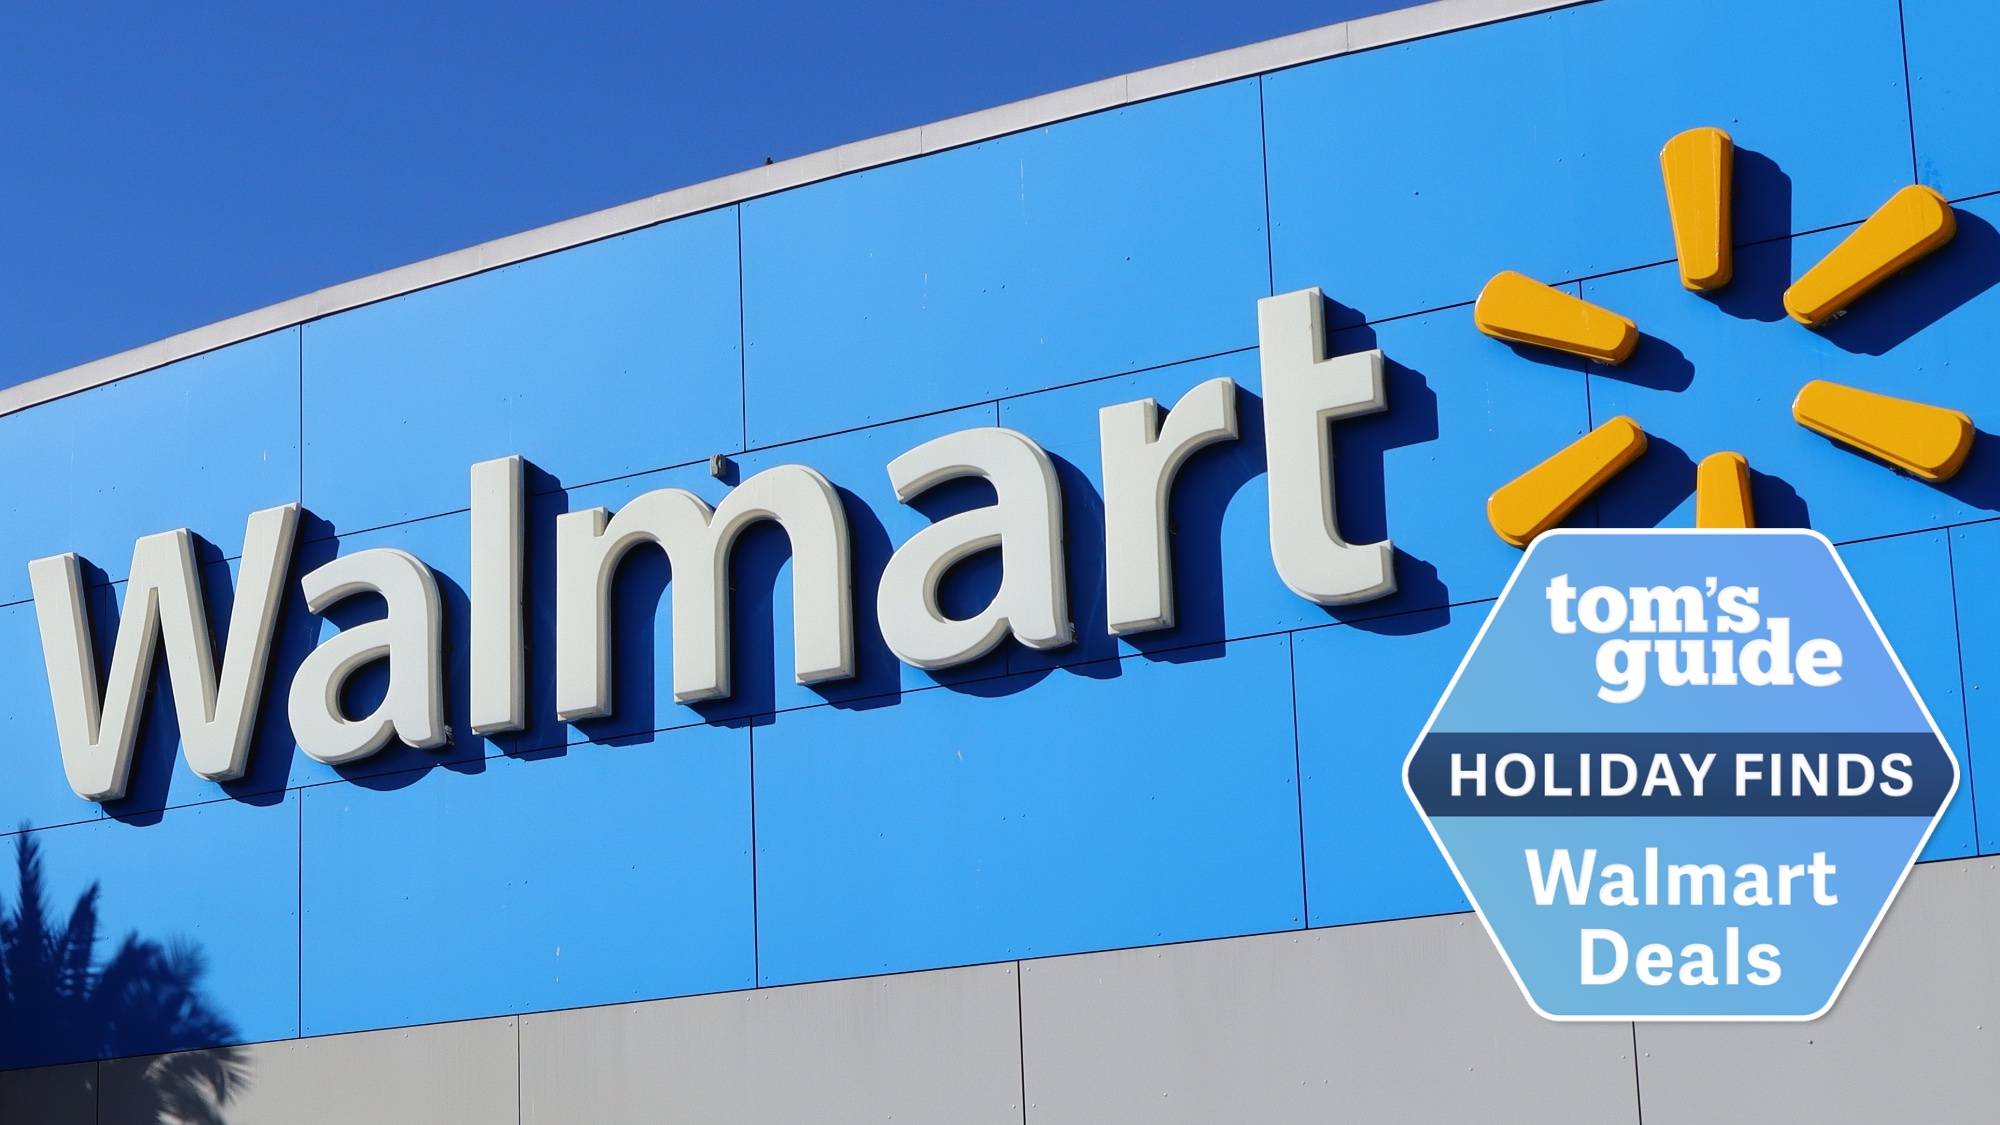 Black Friday 2021: Shop Walmart deals on Shark and Samsung